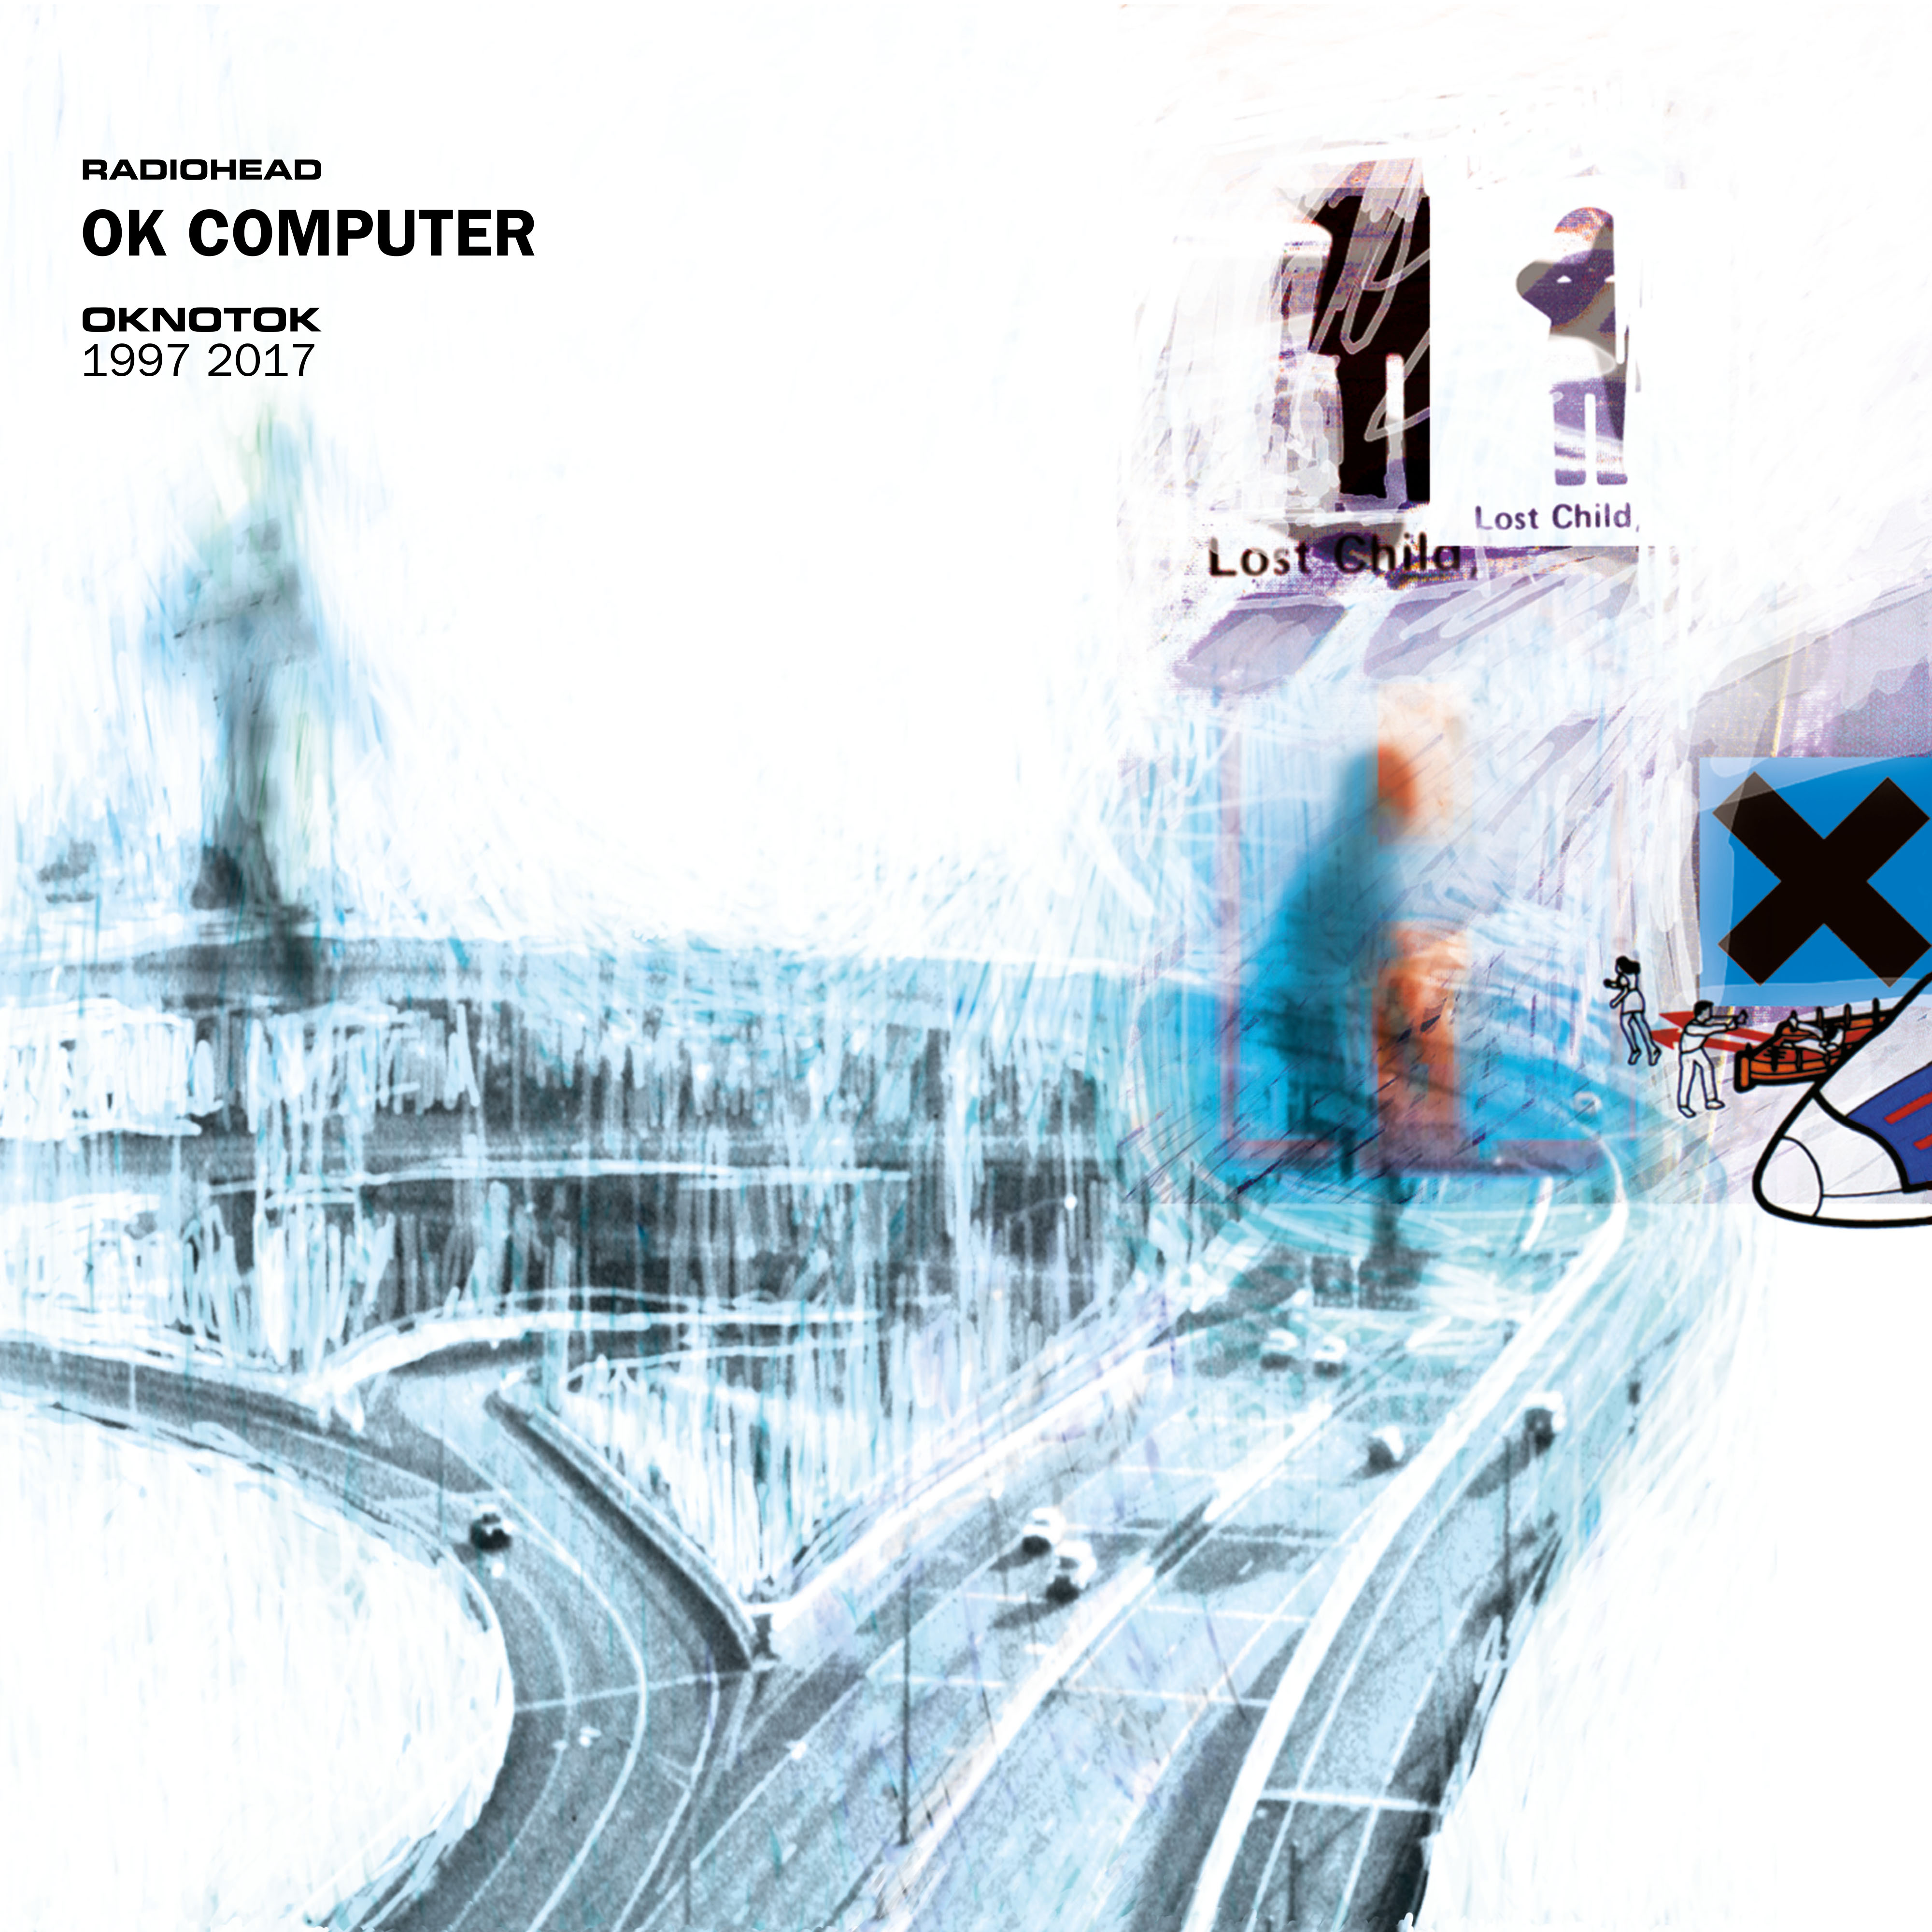 Radiohead - OK COMPUTER OKNOTOK 1997 2017